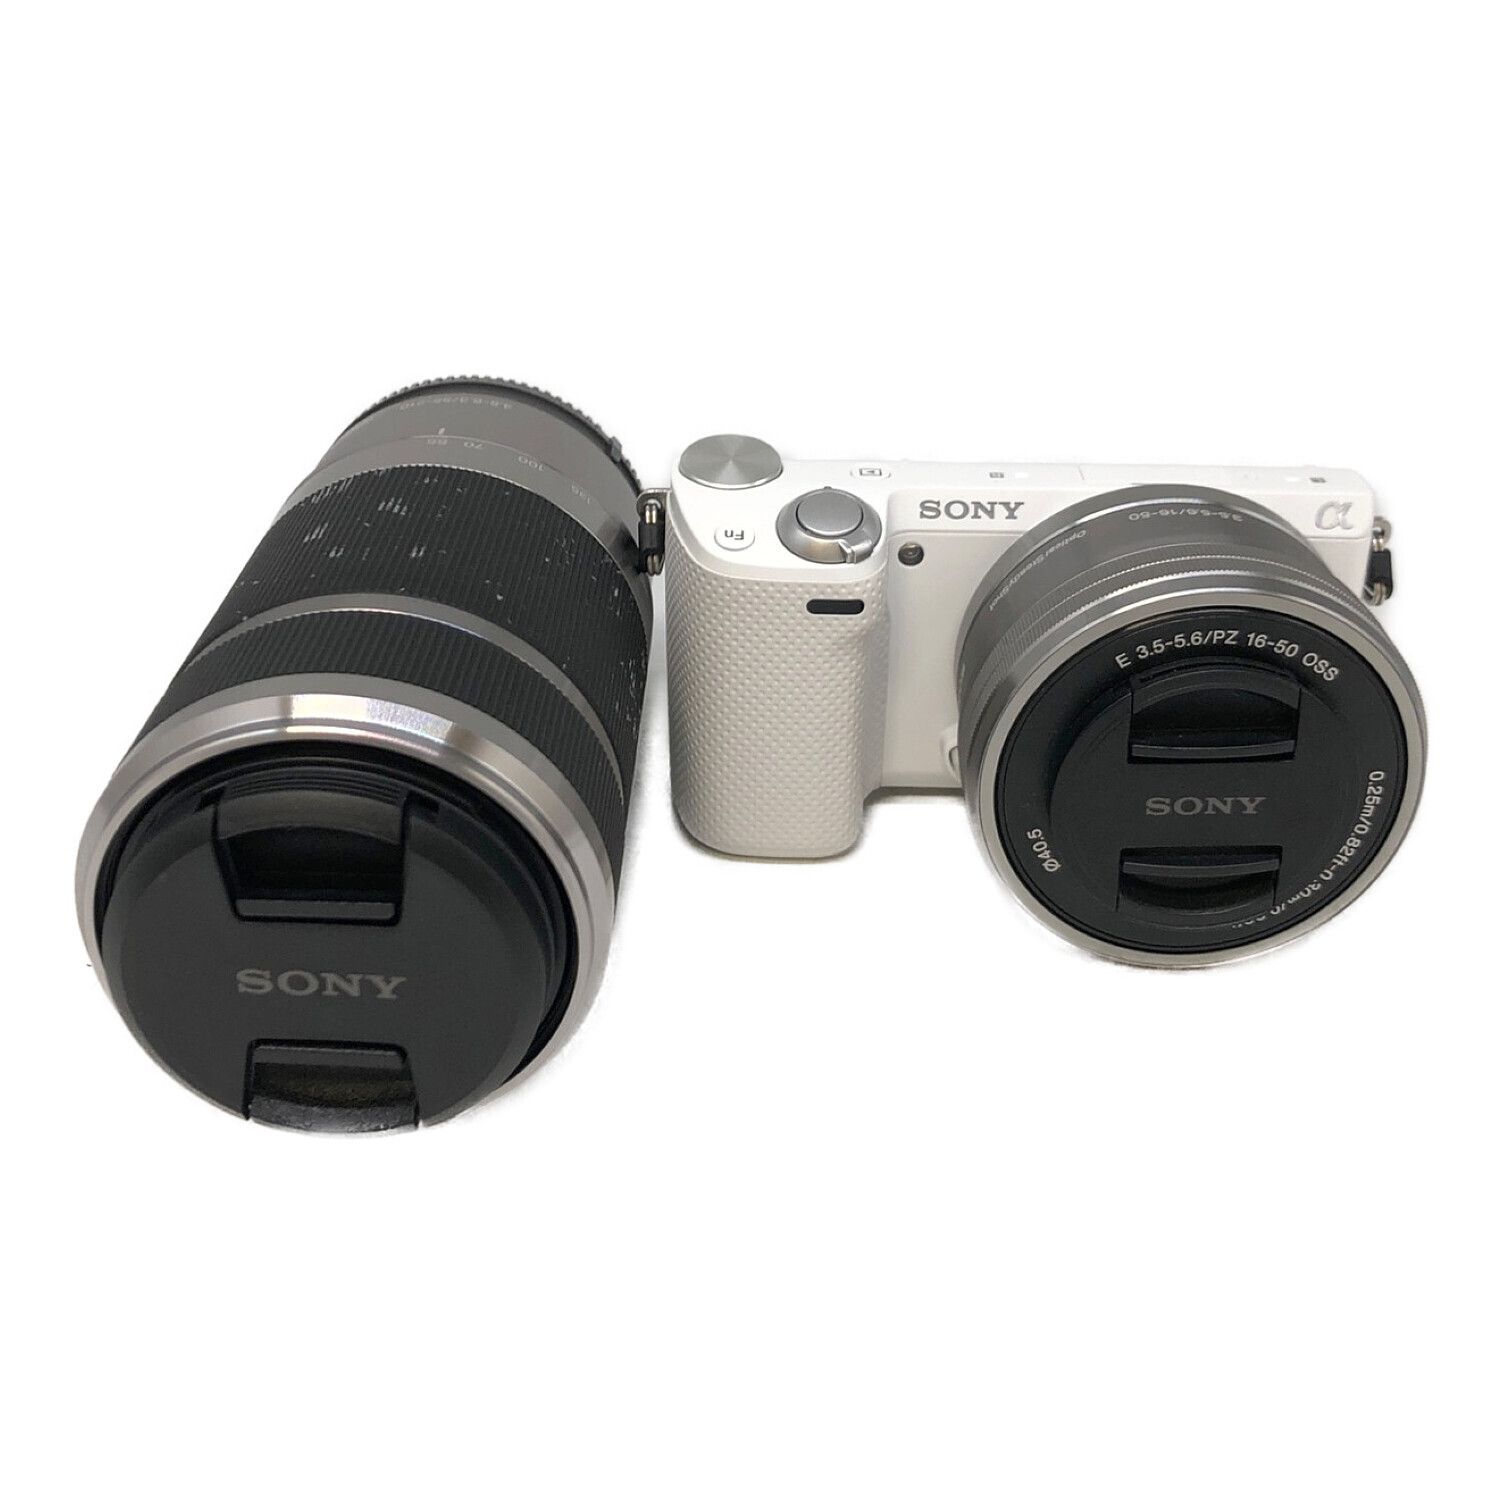 SONY (ソニー) デジタルカメラ ズームカメラ付 NEX-5R 1610万画素 専用